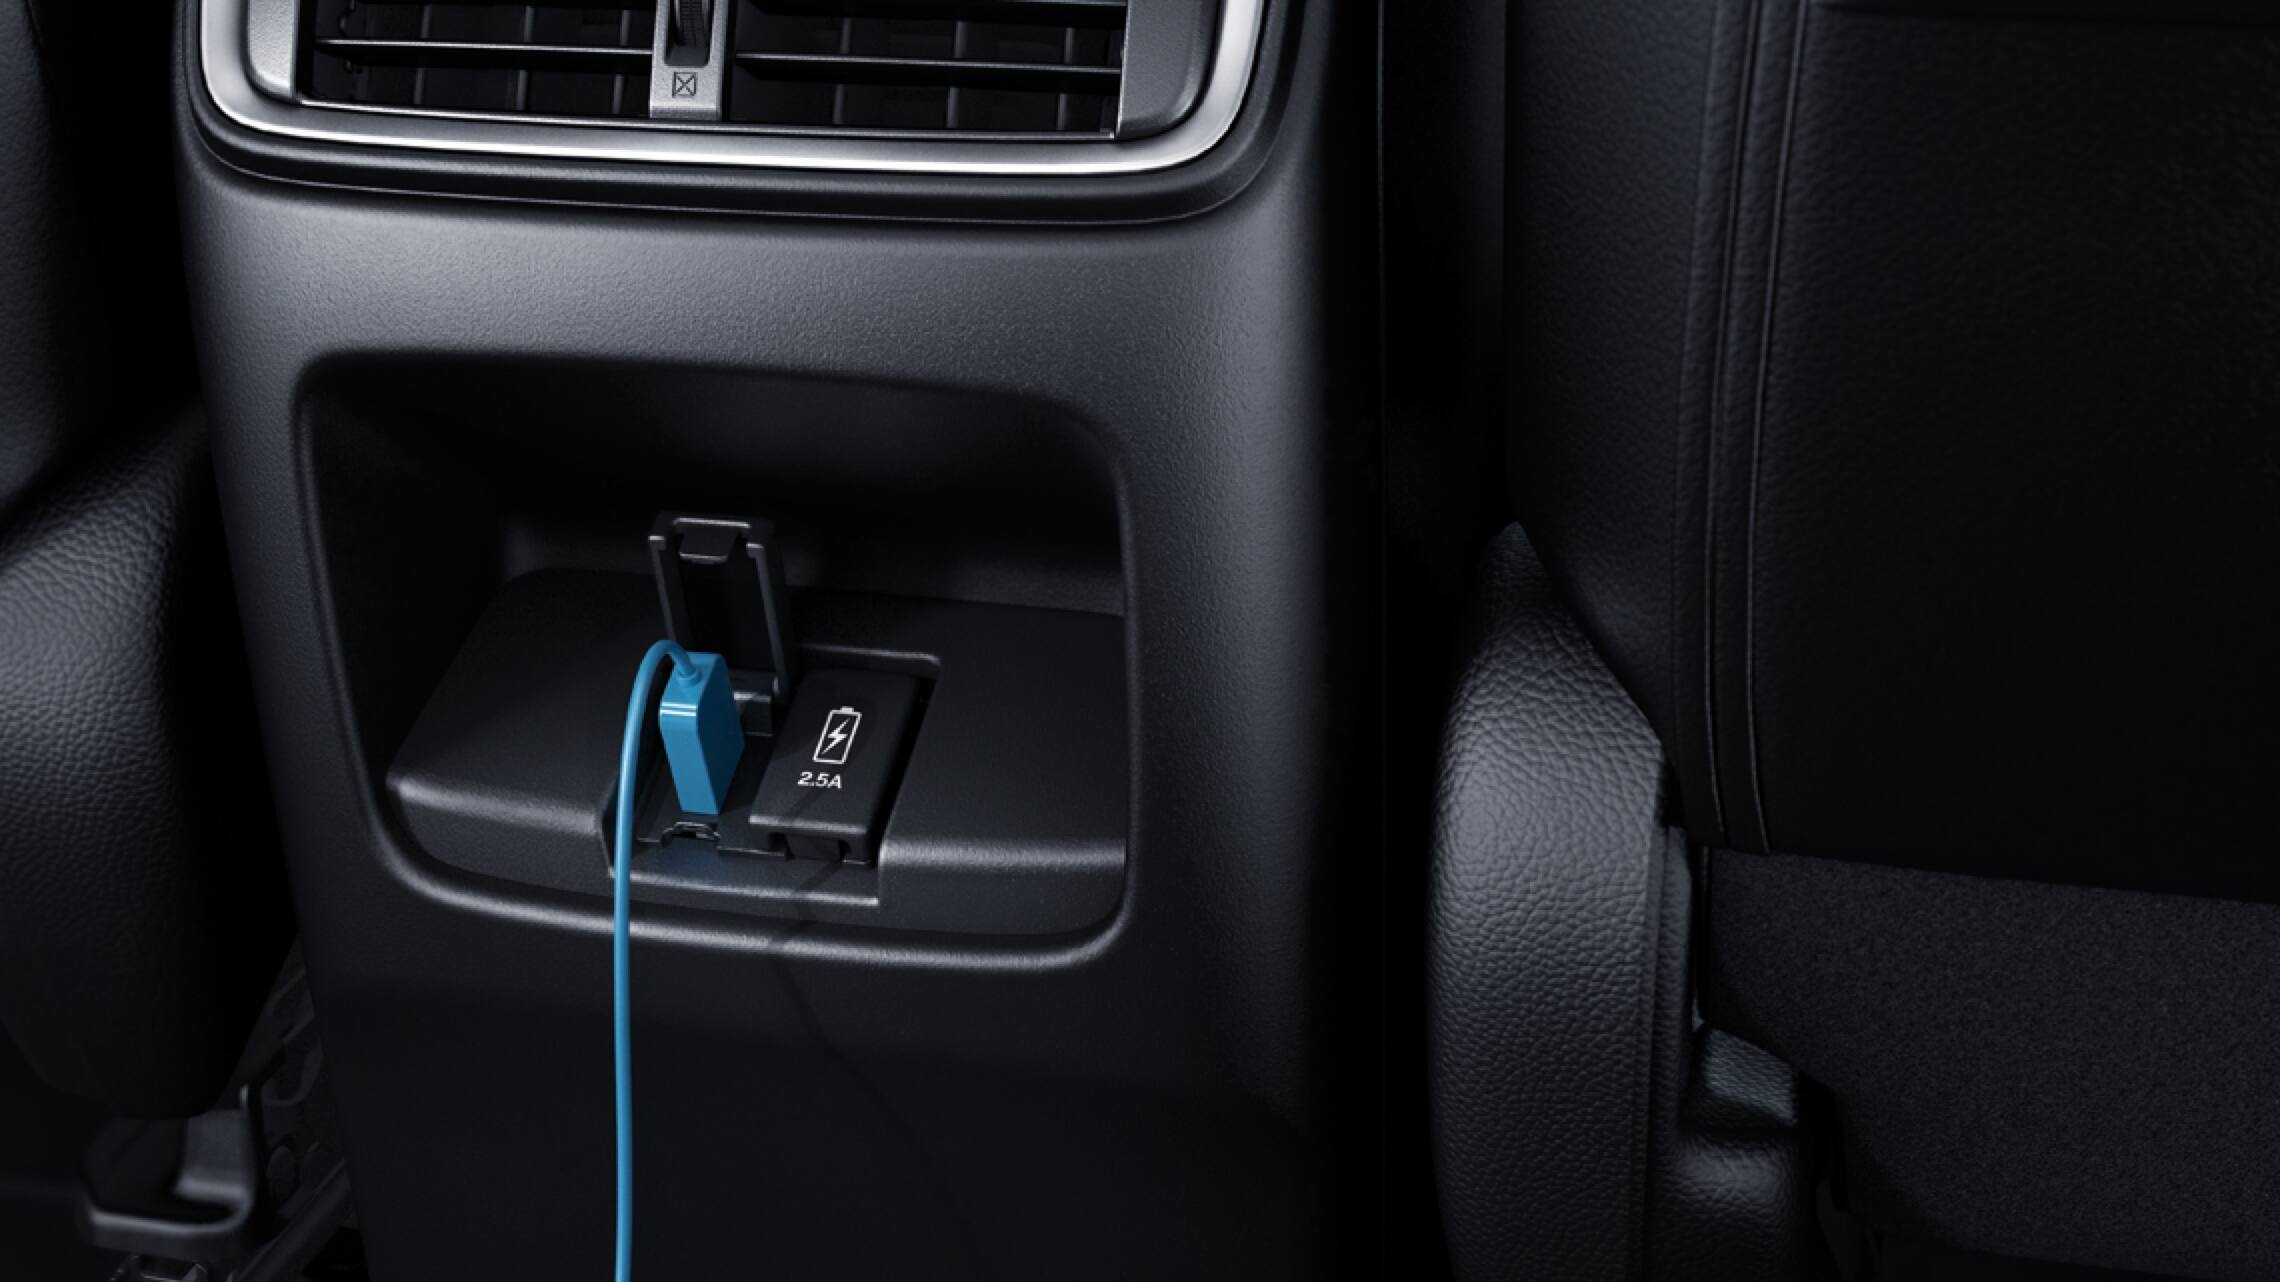 Interior view of rear USB ports in the 2019 Honda CR-V.